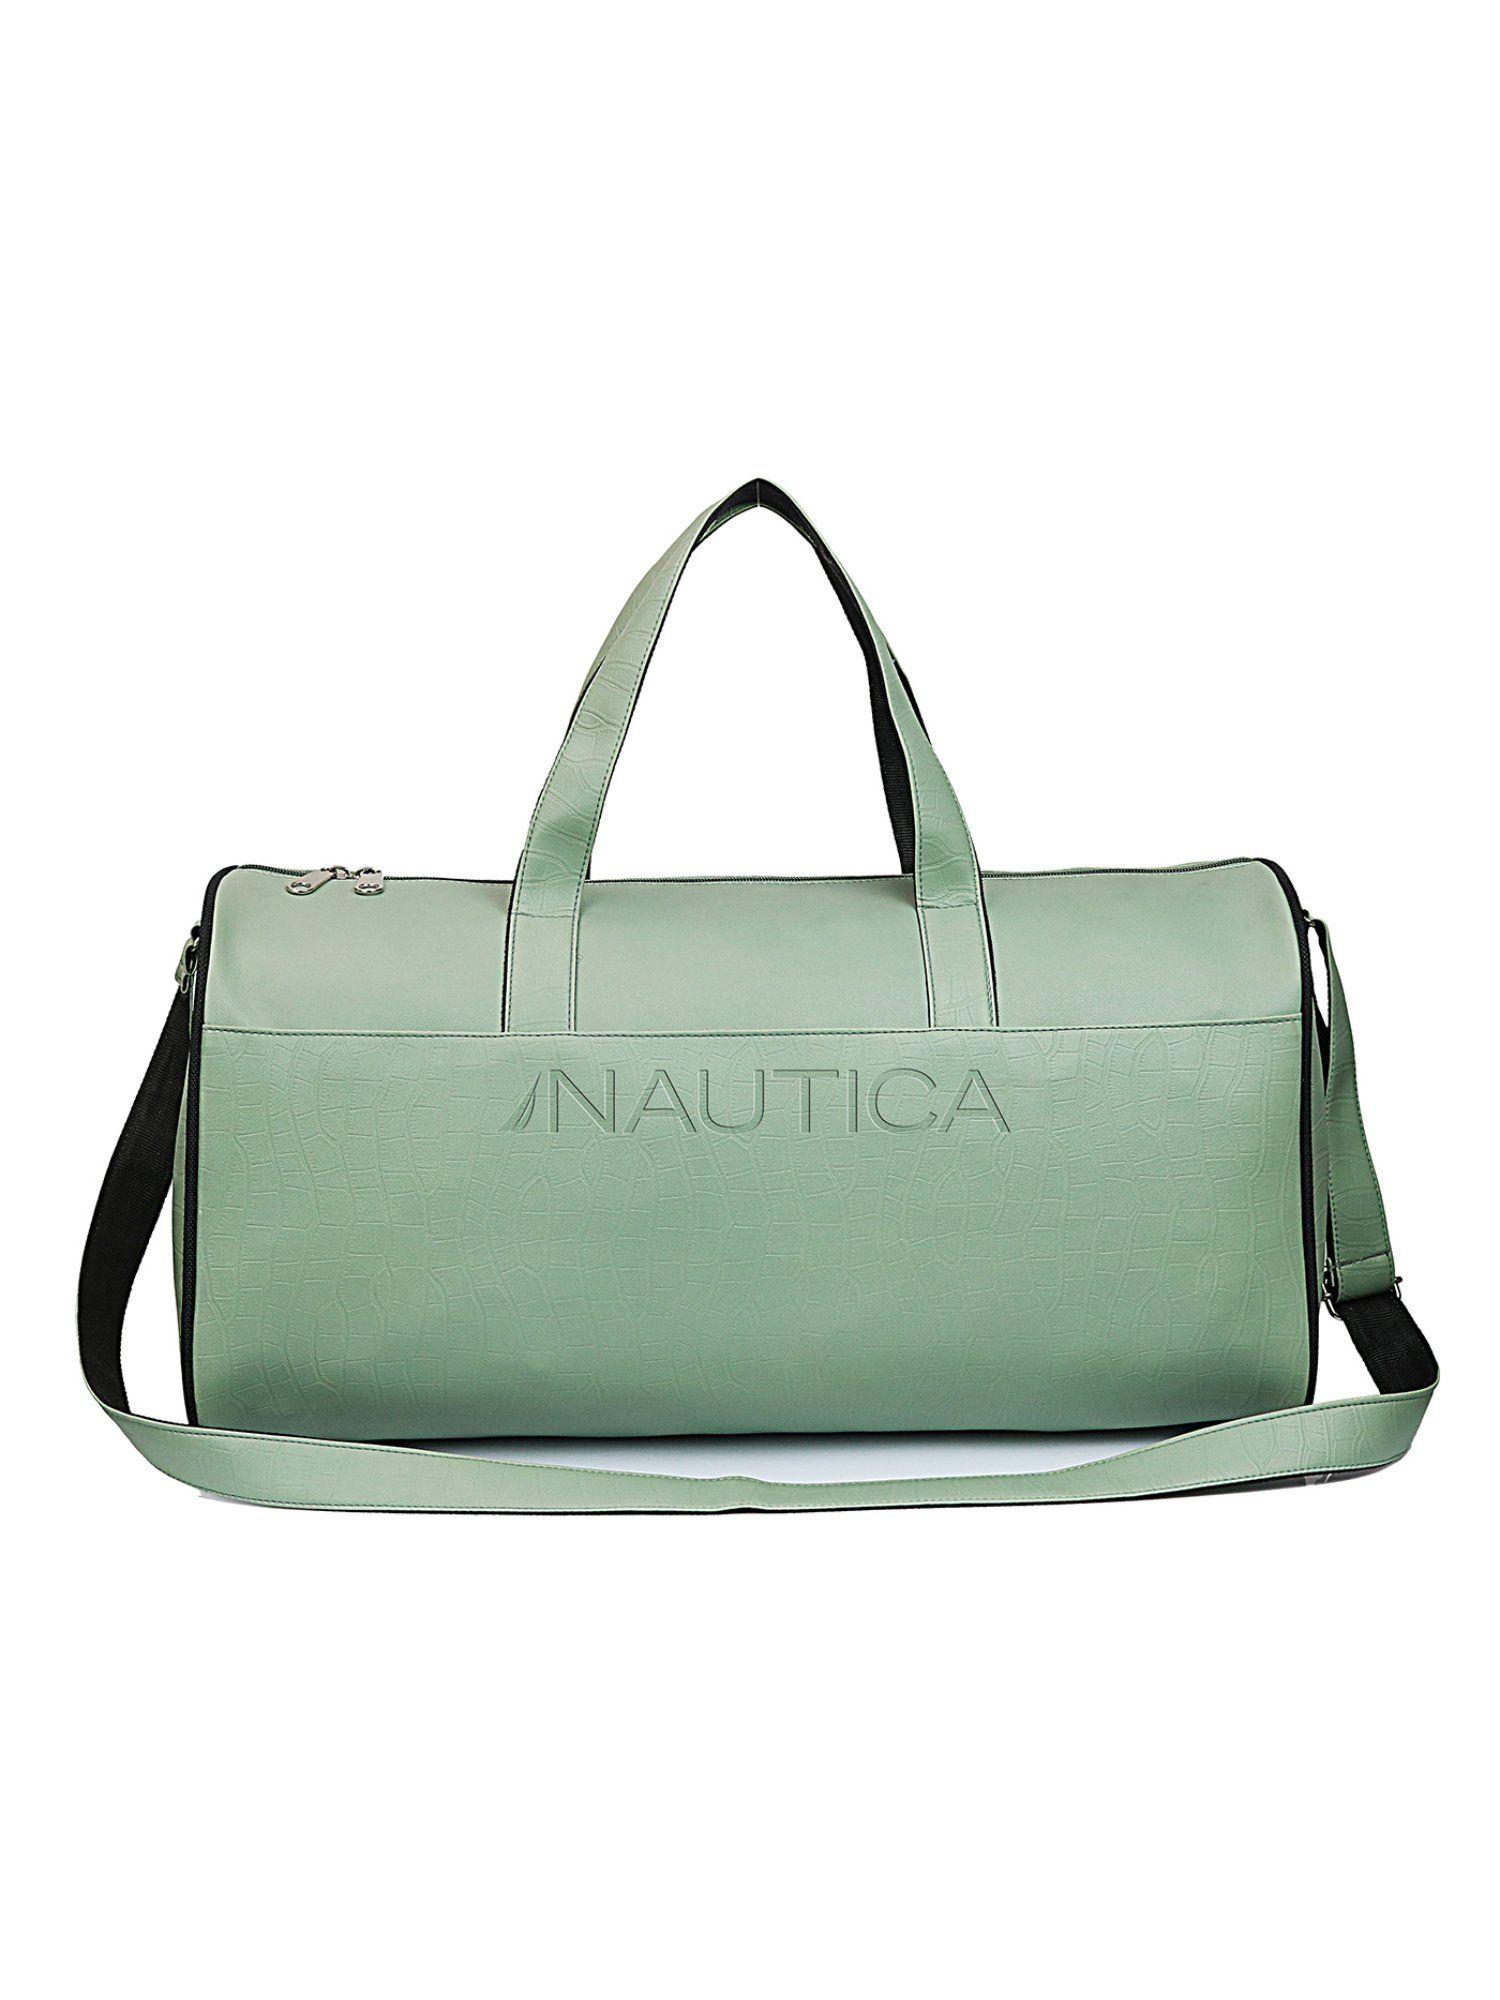 Duffle Bag for Travel Suitable for Men & Women - Lite Green (S)